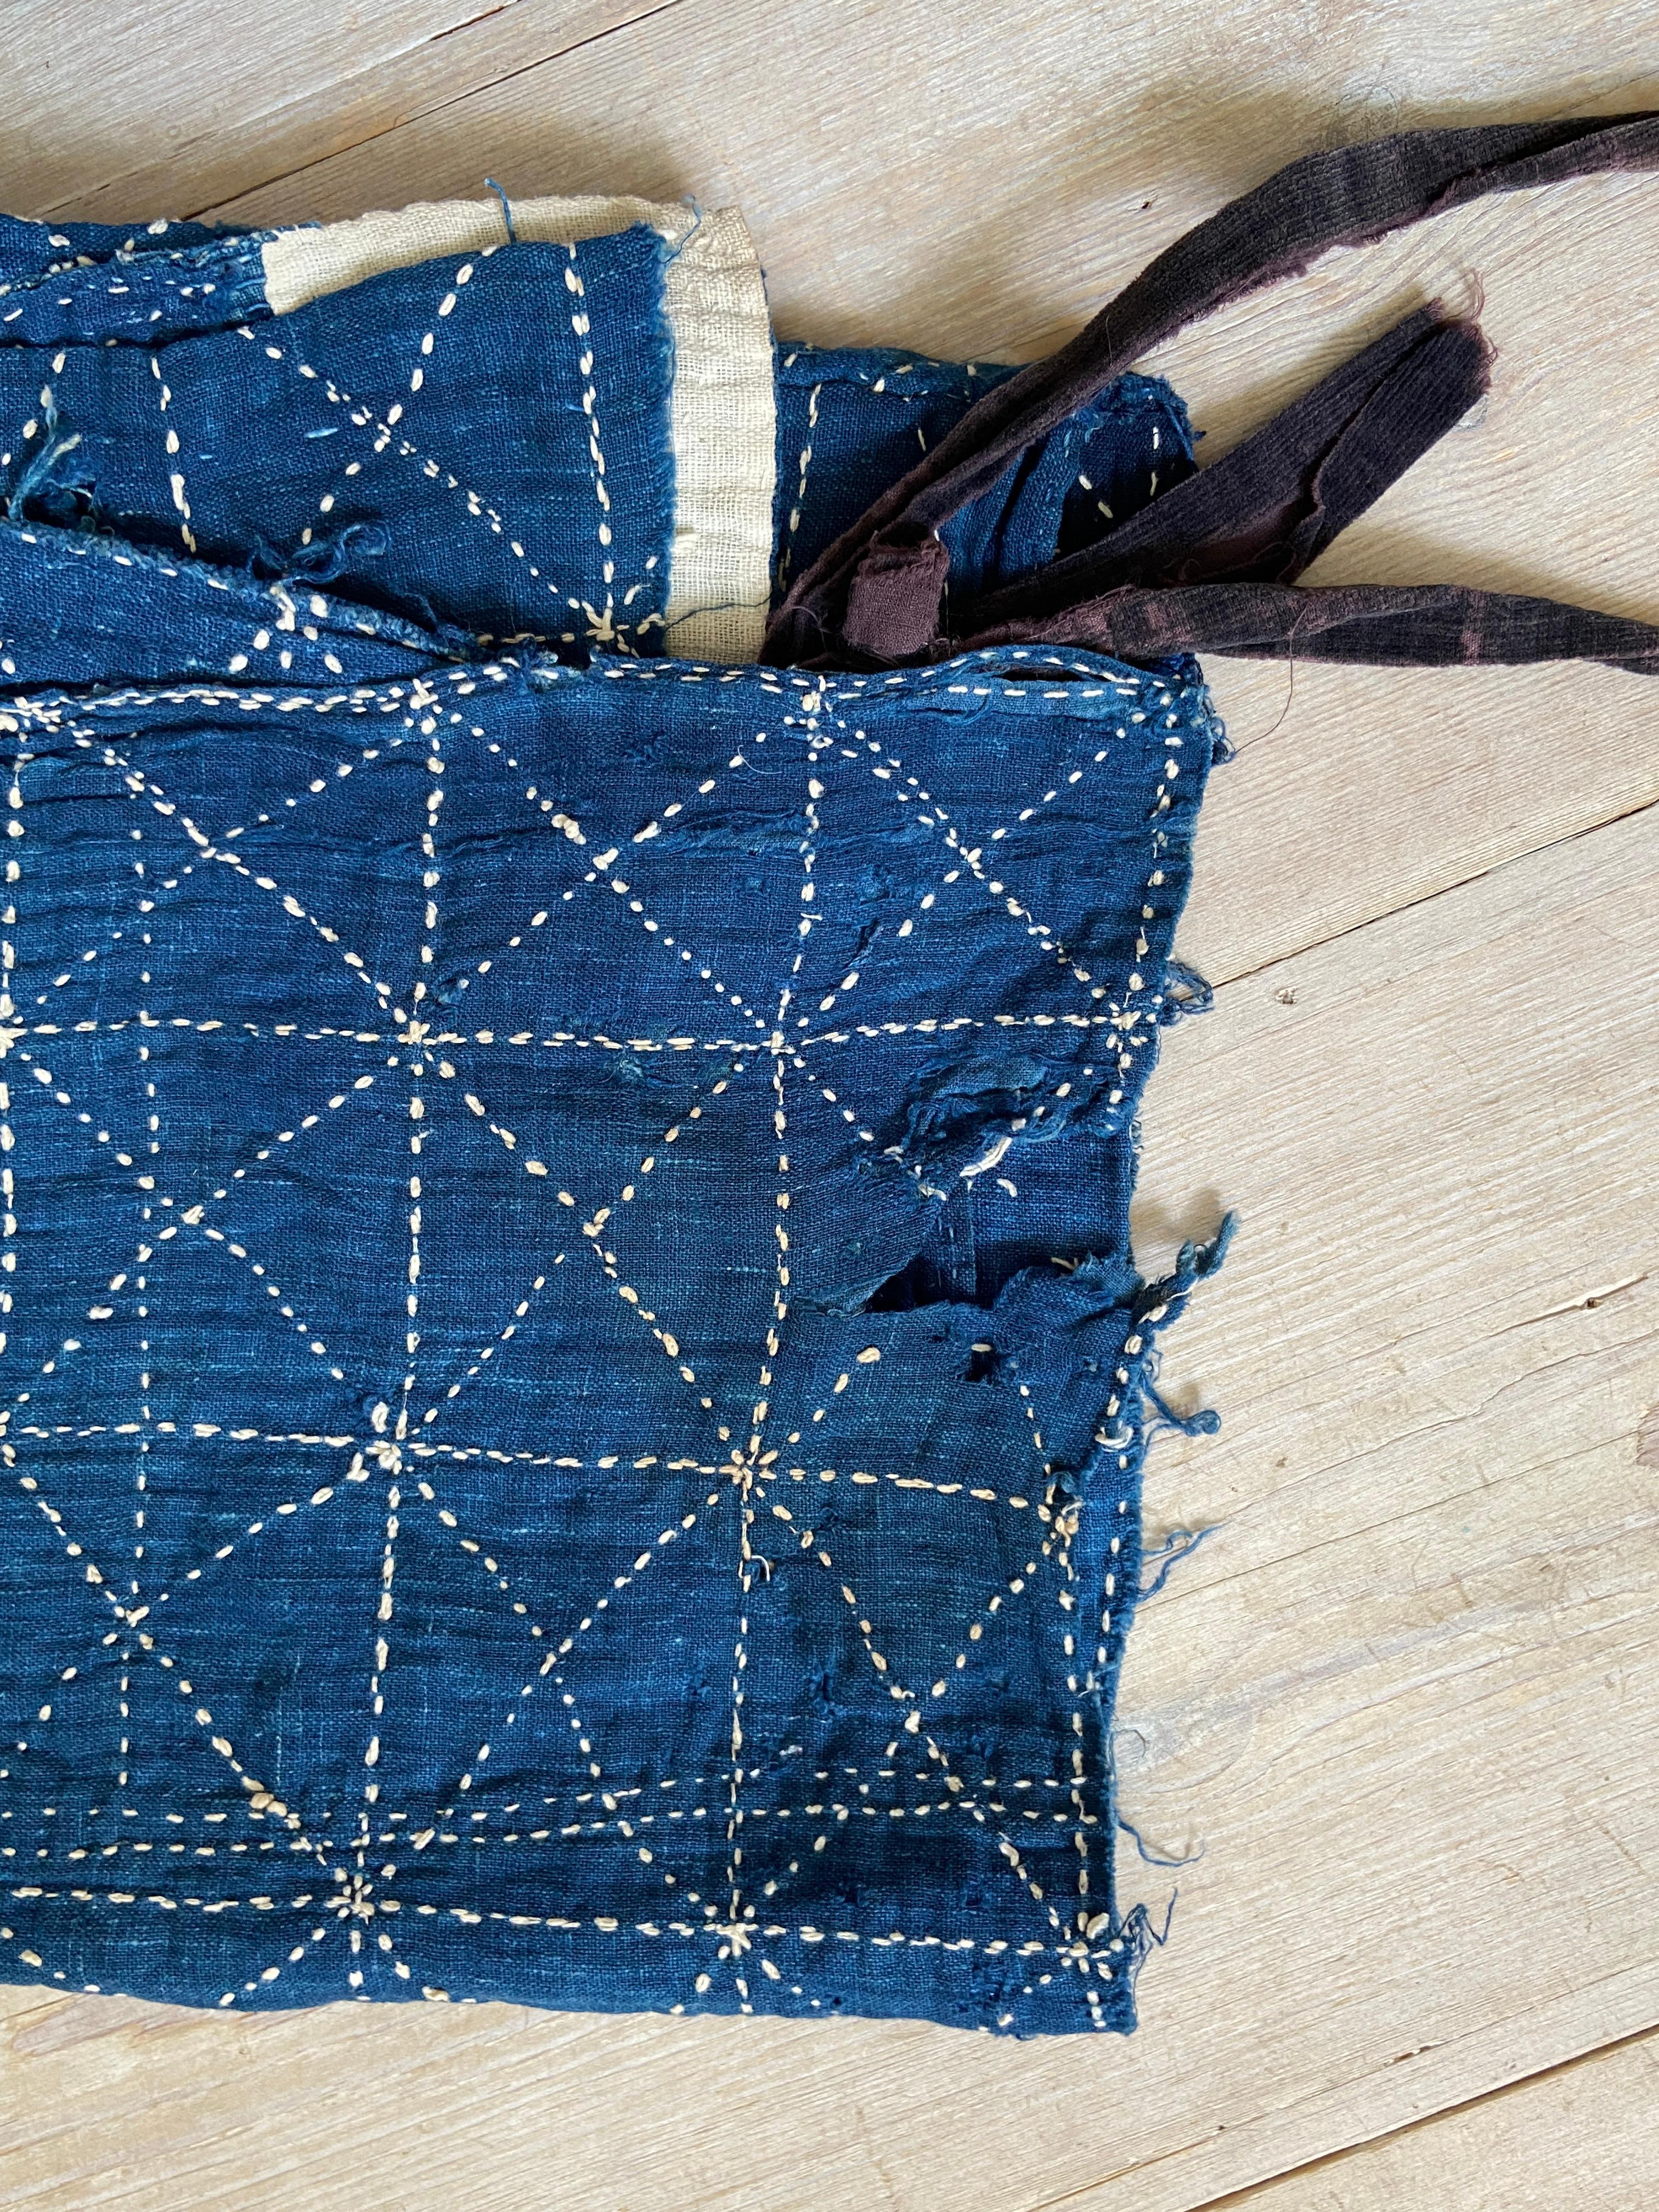 Vintage Handcraft Patched Textile 